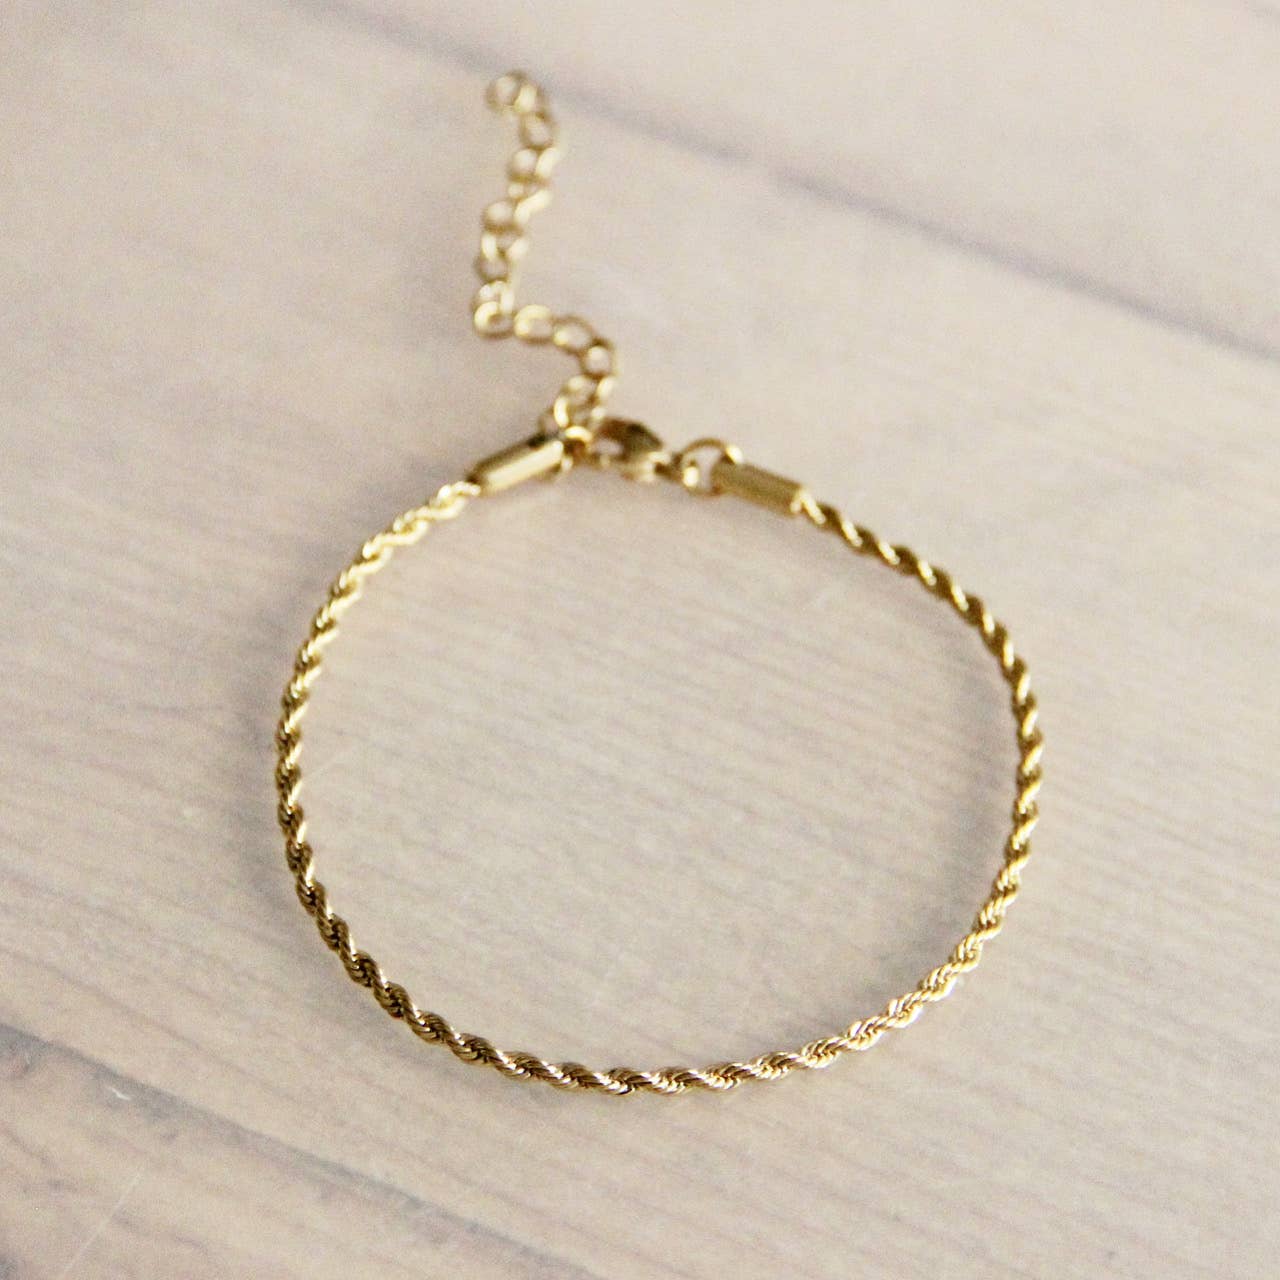 Steel "twisted" bracelet small – gold